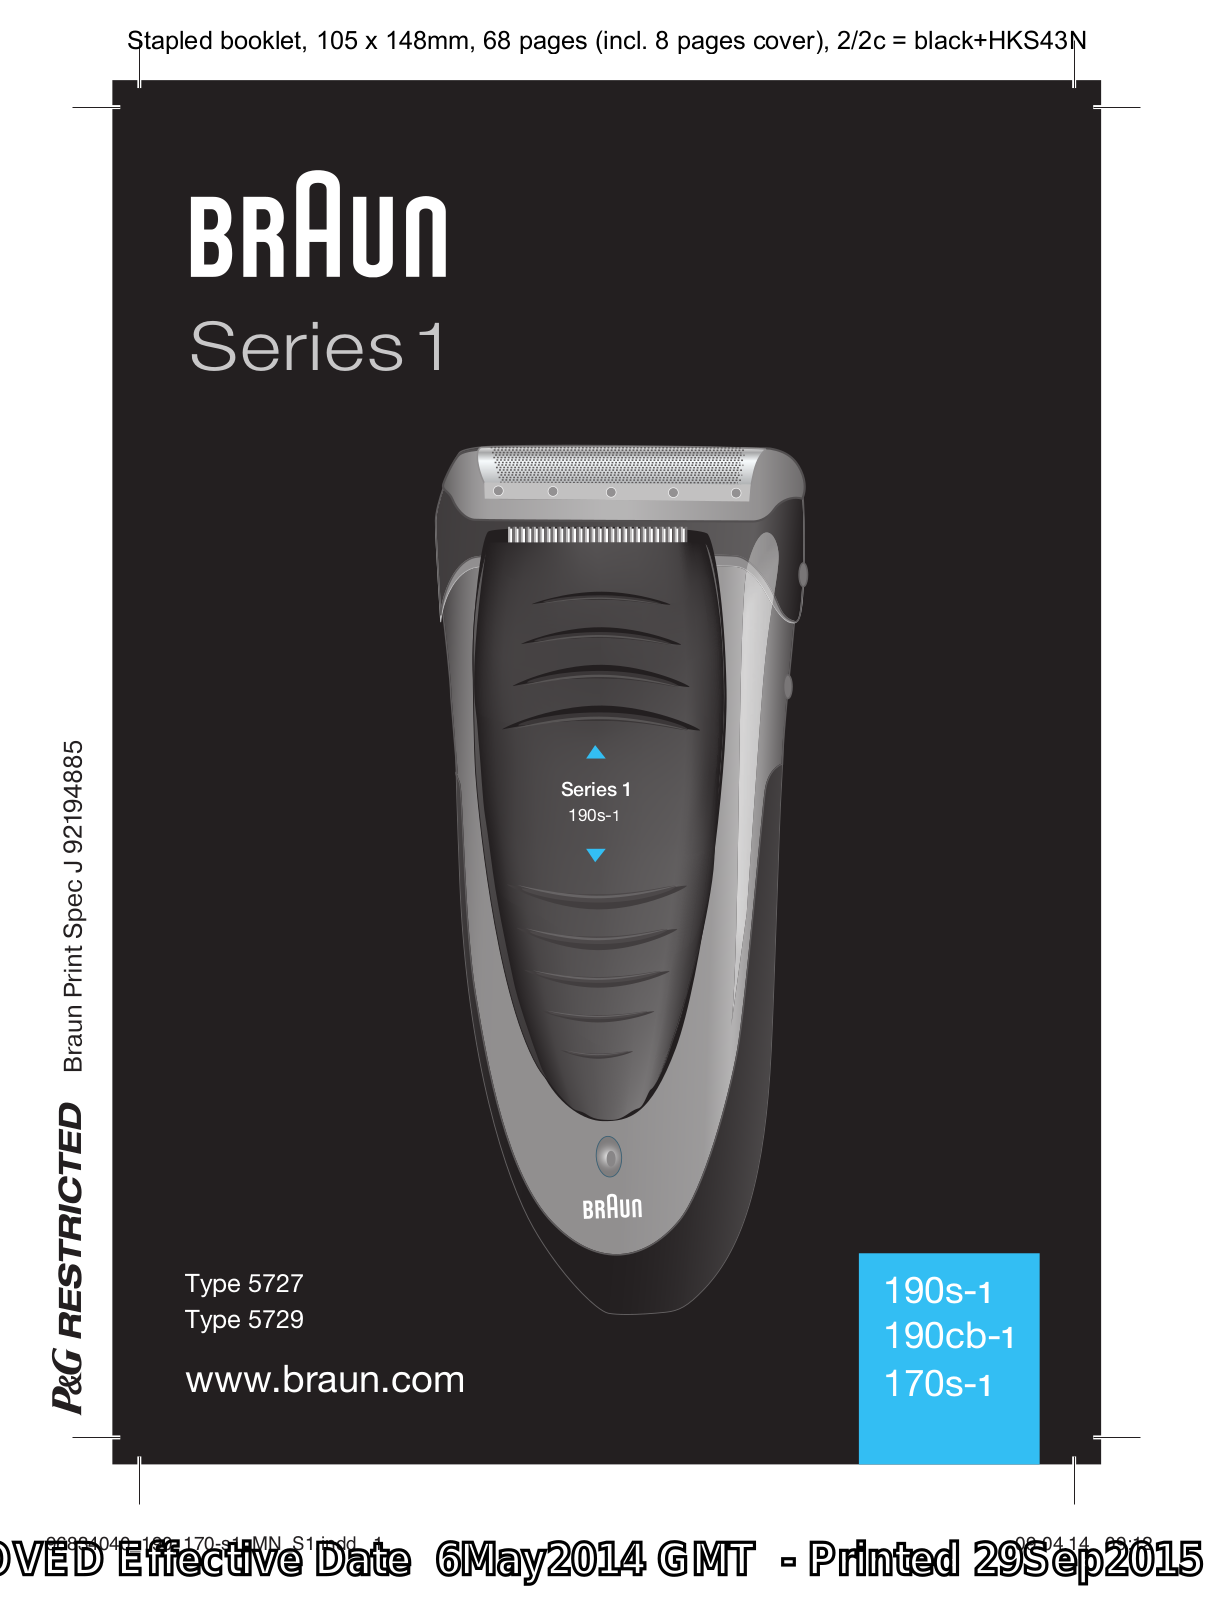 Braun 190cb-1, 190s-1, 170s-1 operation manual